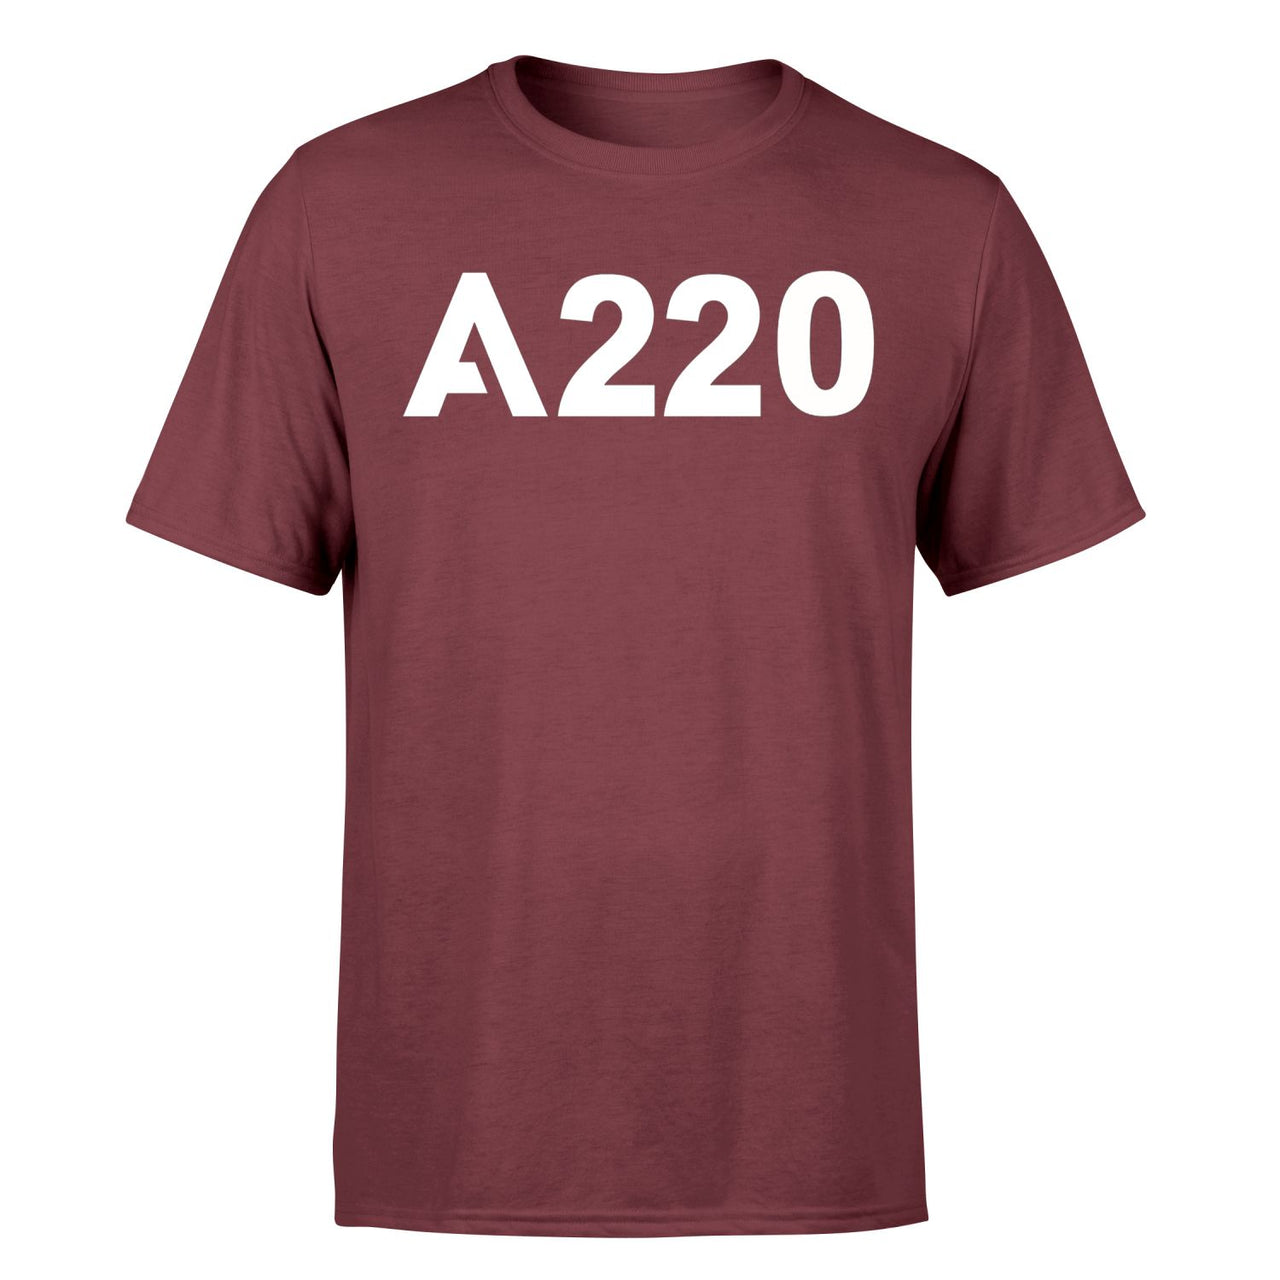 A220 Flat Text Designed T-Shirts